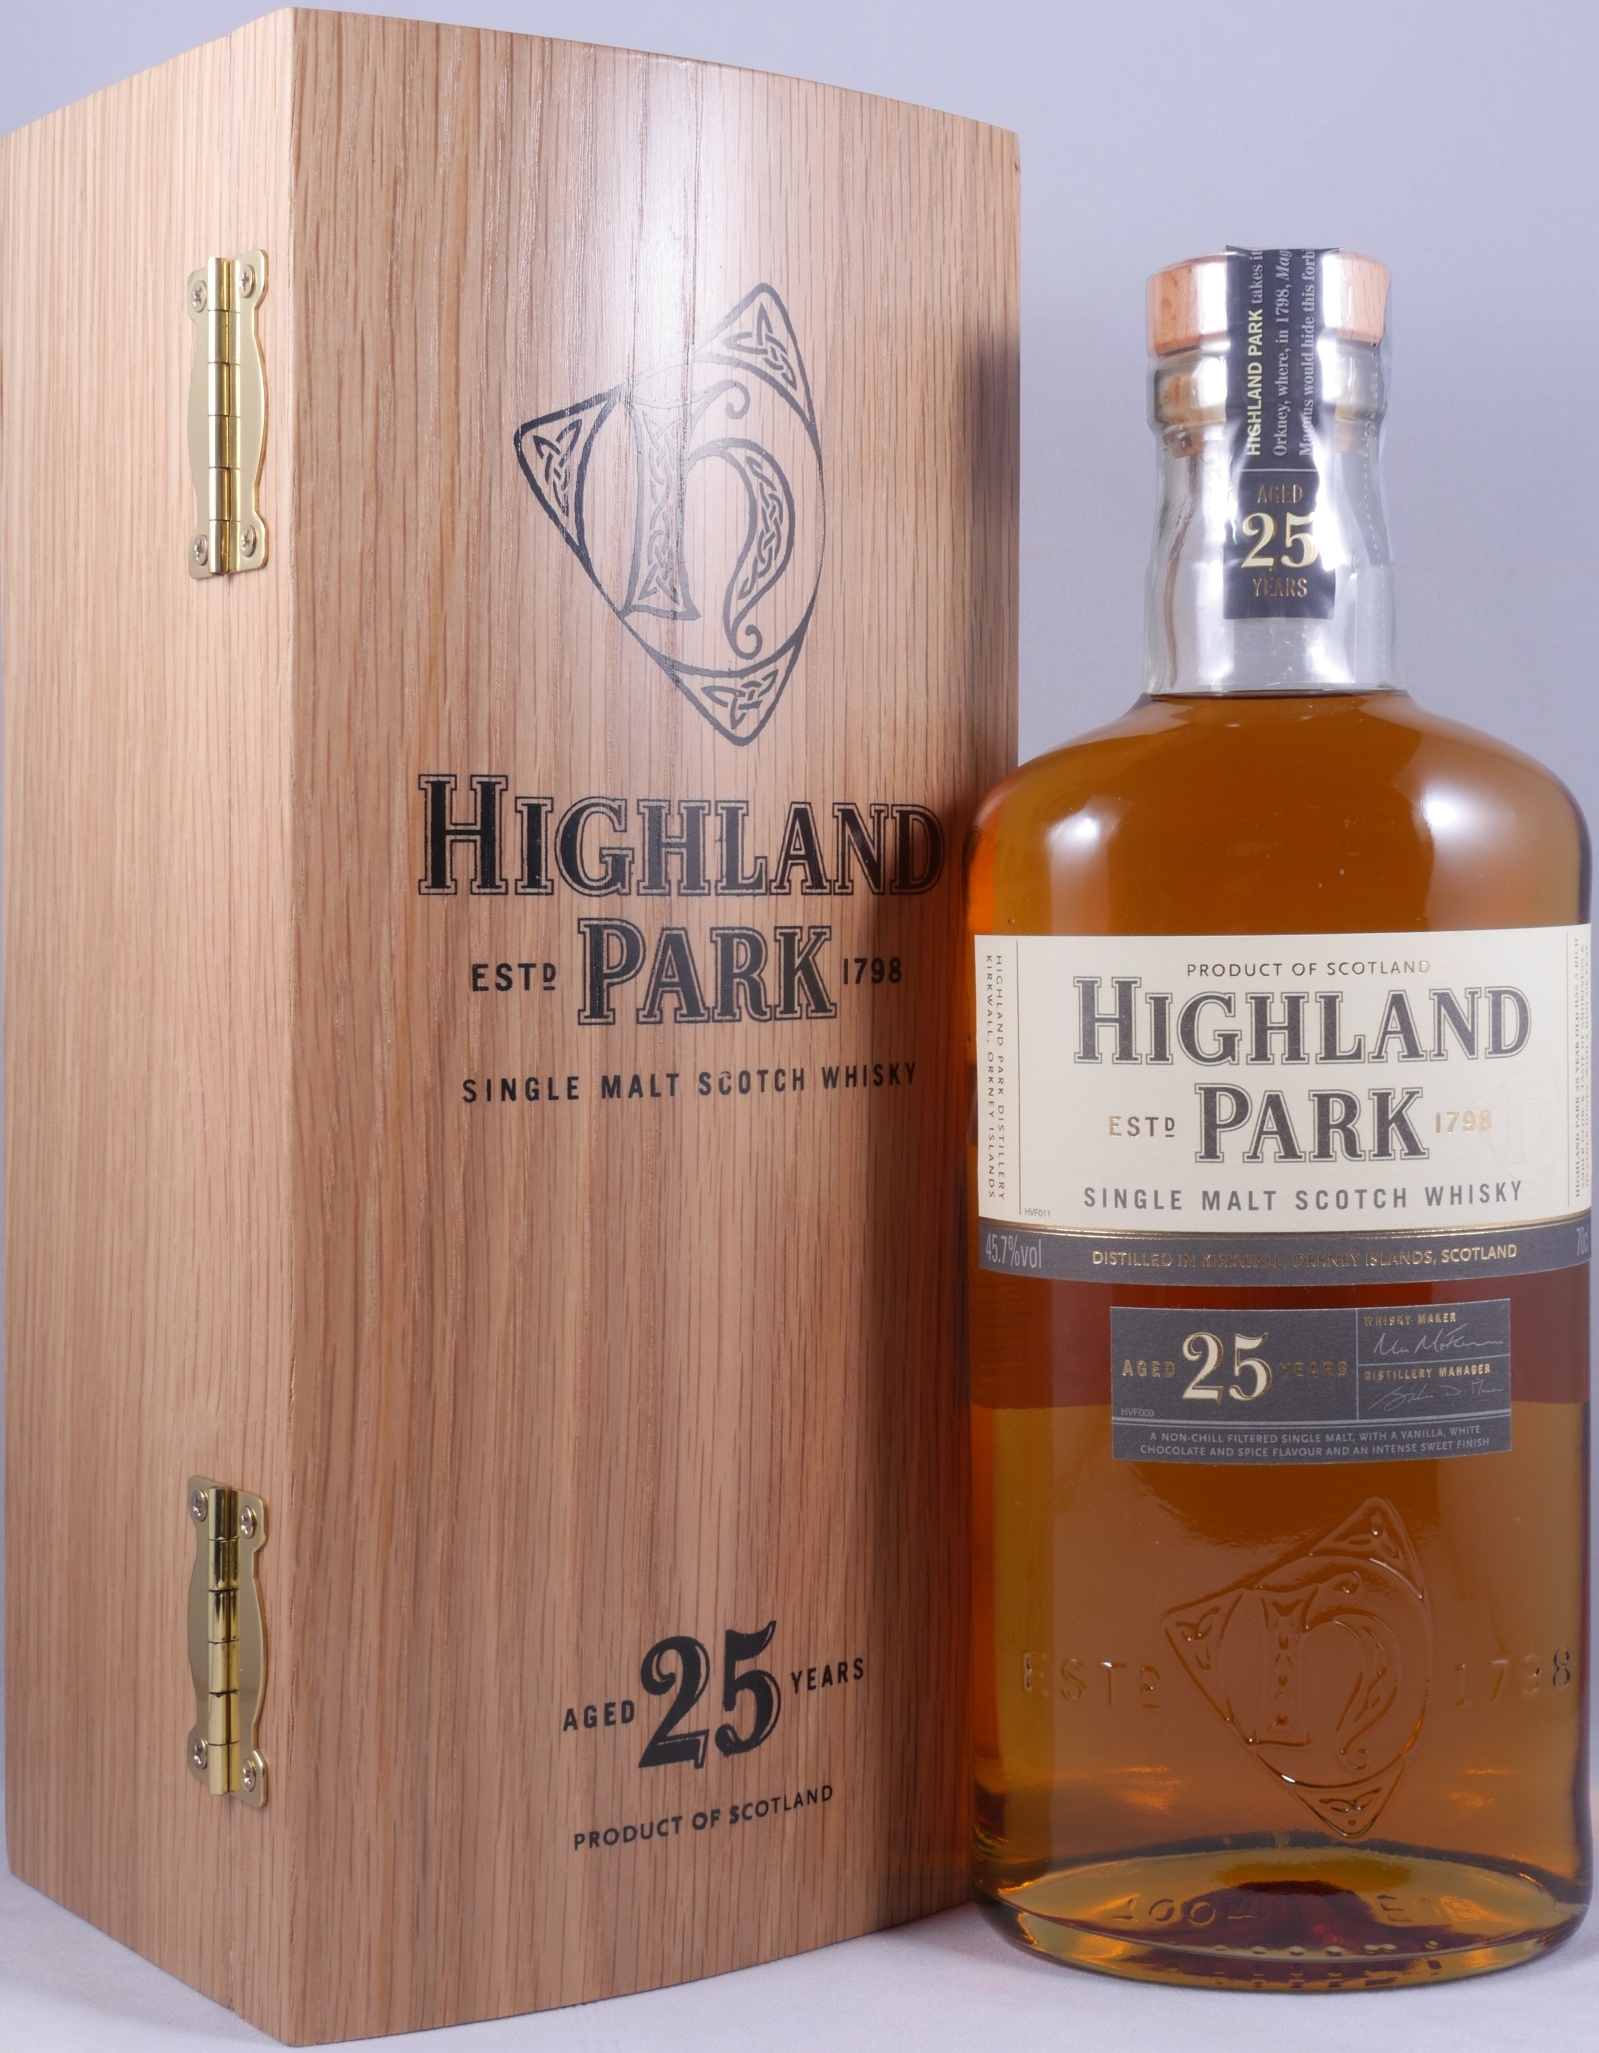 AmCom Whisky Years-old Highland Malt secure ABV 45.7% Orkney 25 online Scotch 2012 Park Release Islands at Buy Single